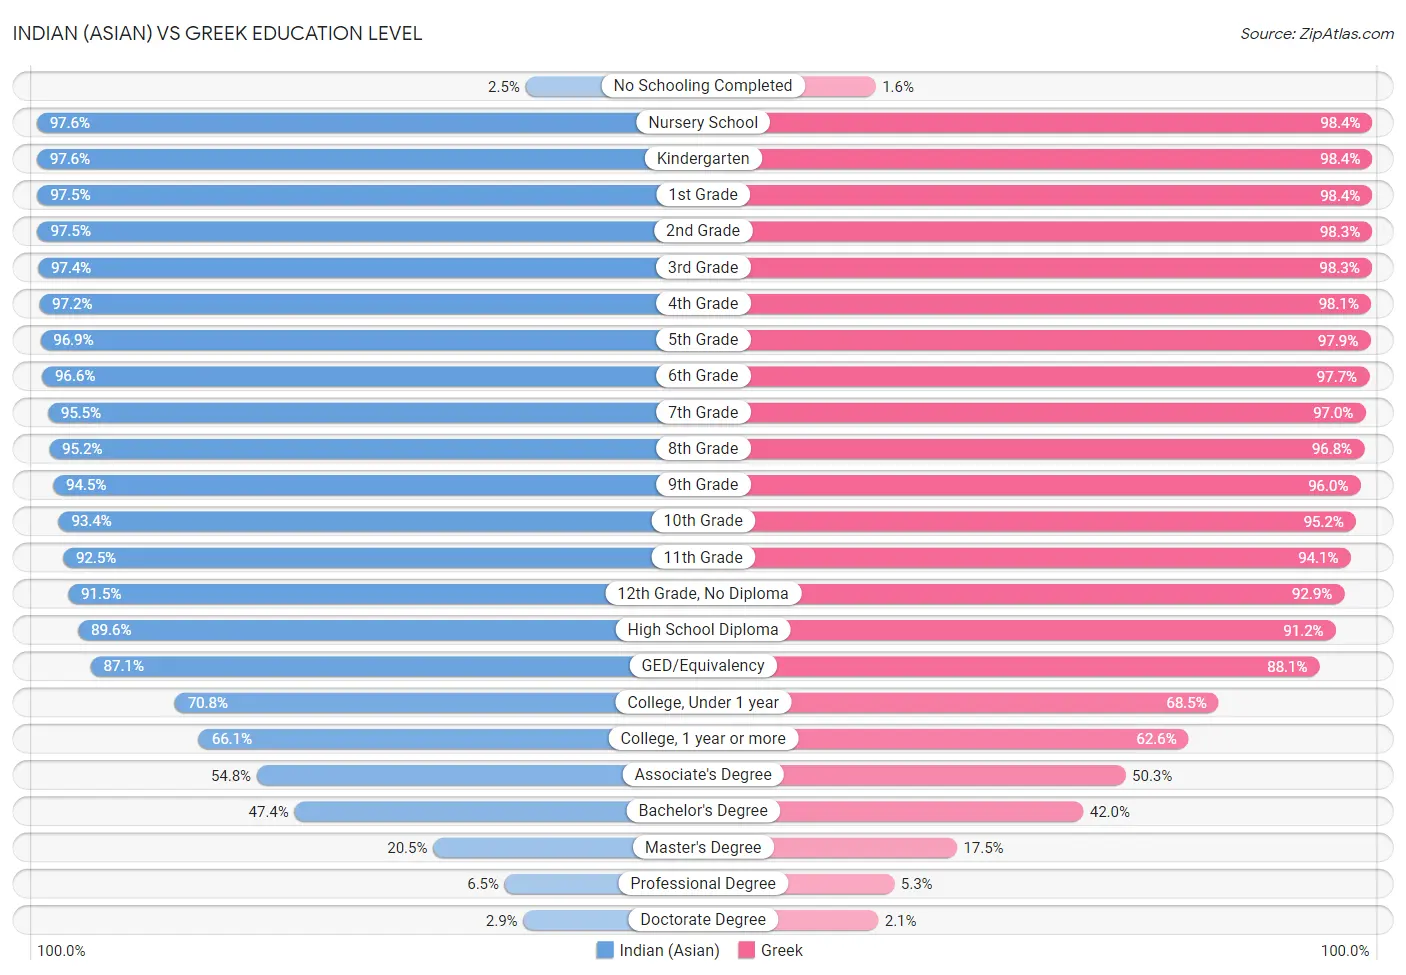 Indian (Asian) vs Greek Education Level